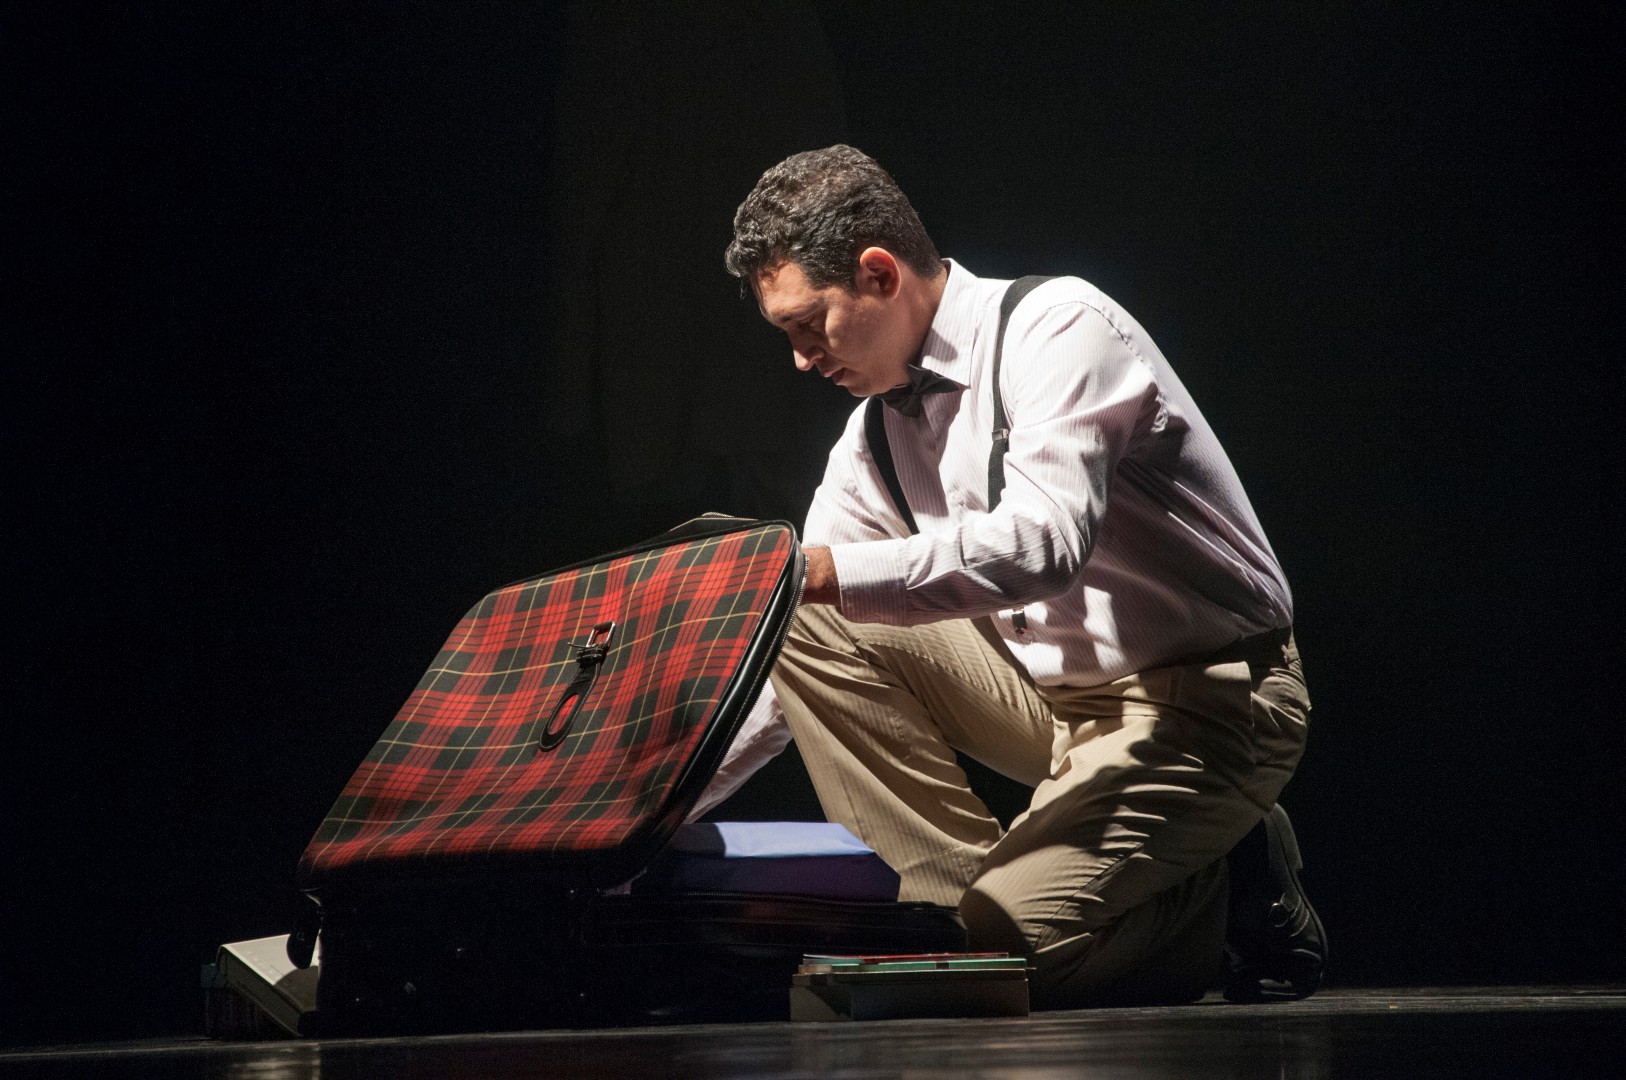 man in tie kneeling on floor near suitcase